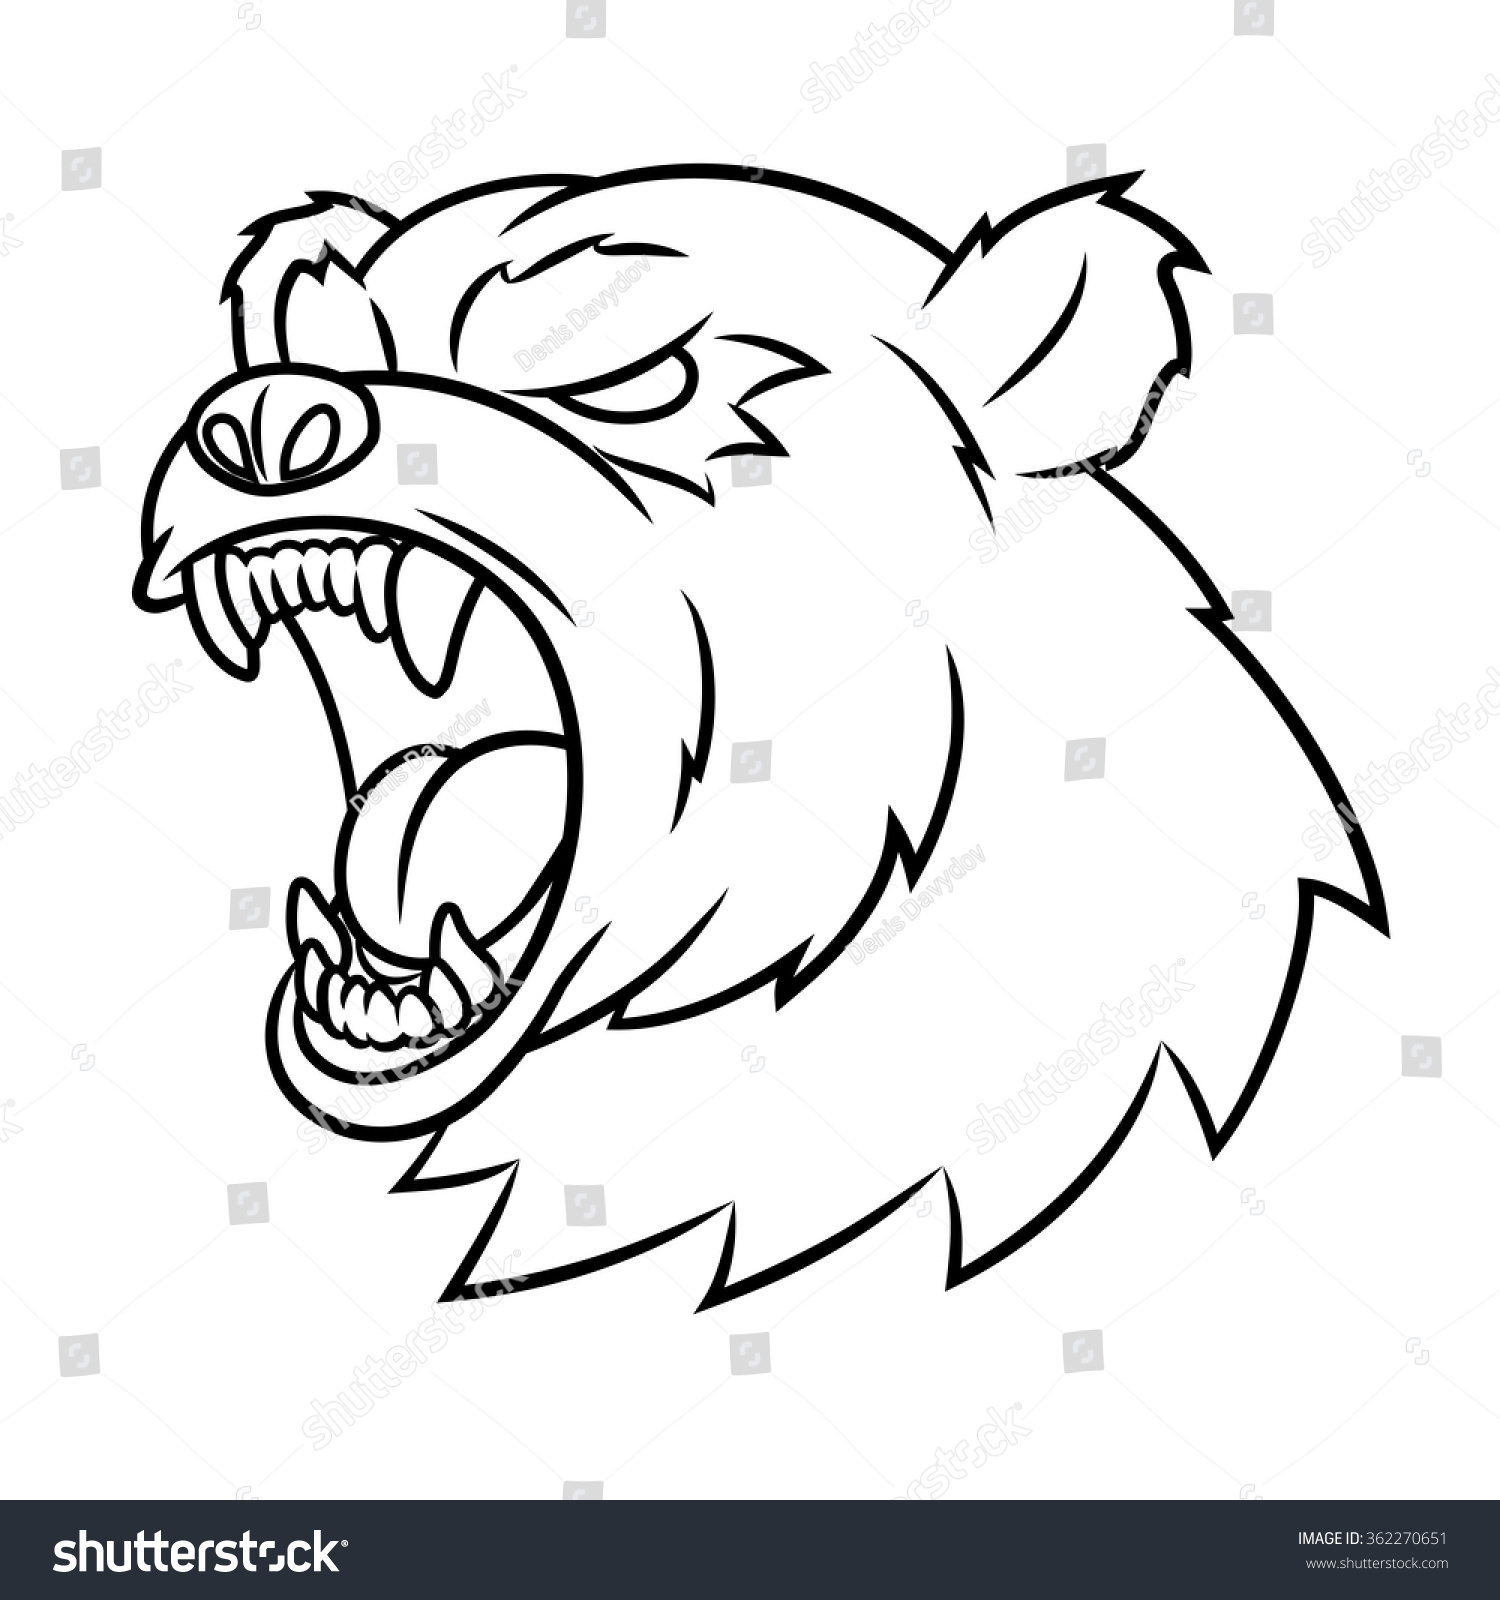 Angry Bear Head Stock Vector (Royalty Free) 362270651